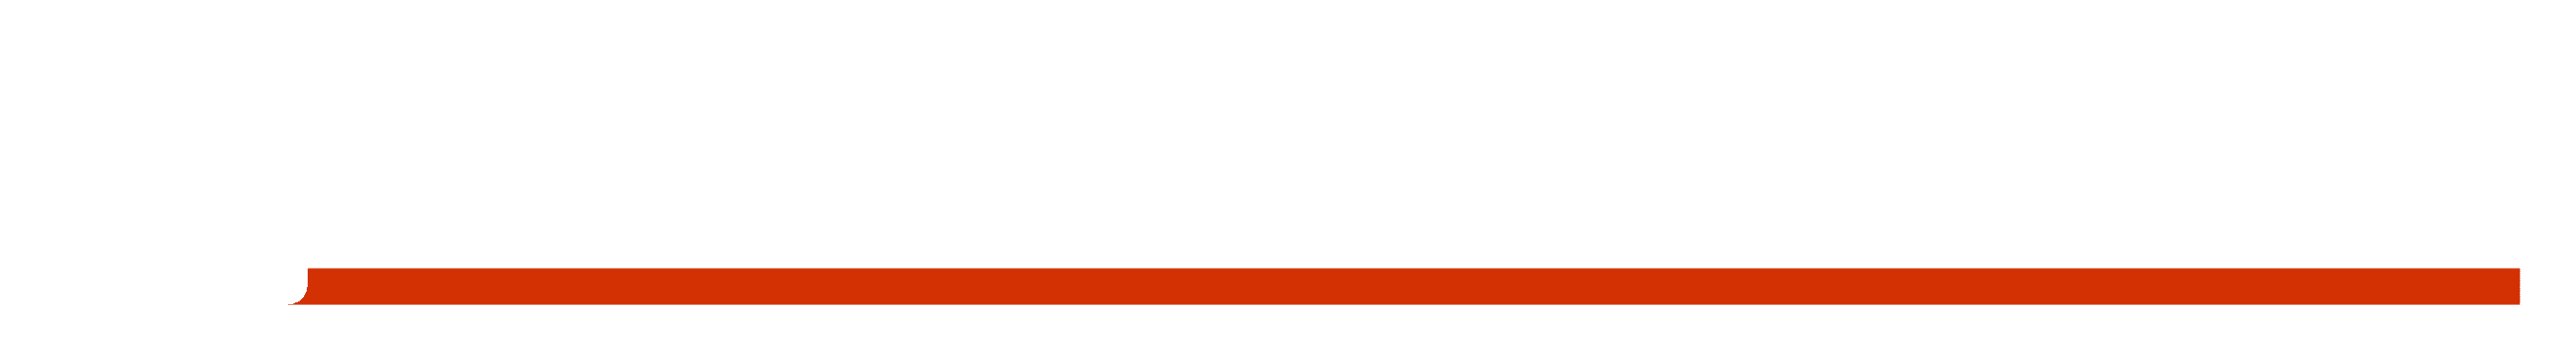 One Stop Towing Houston Logo